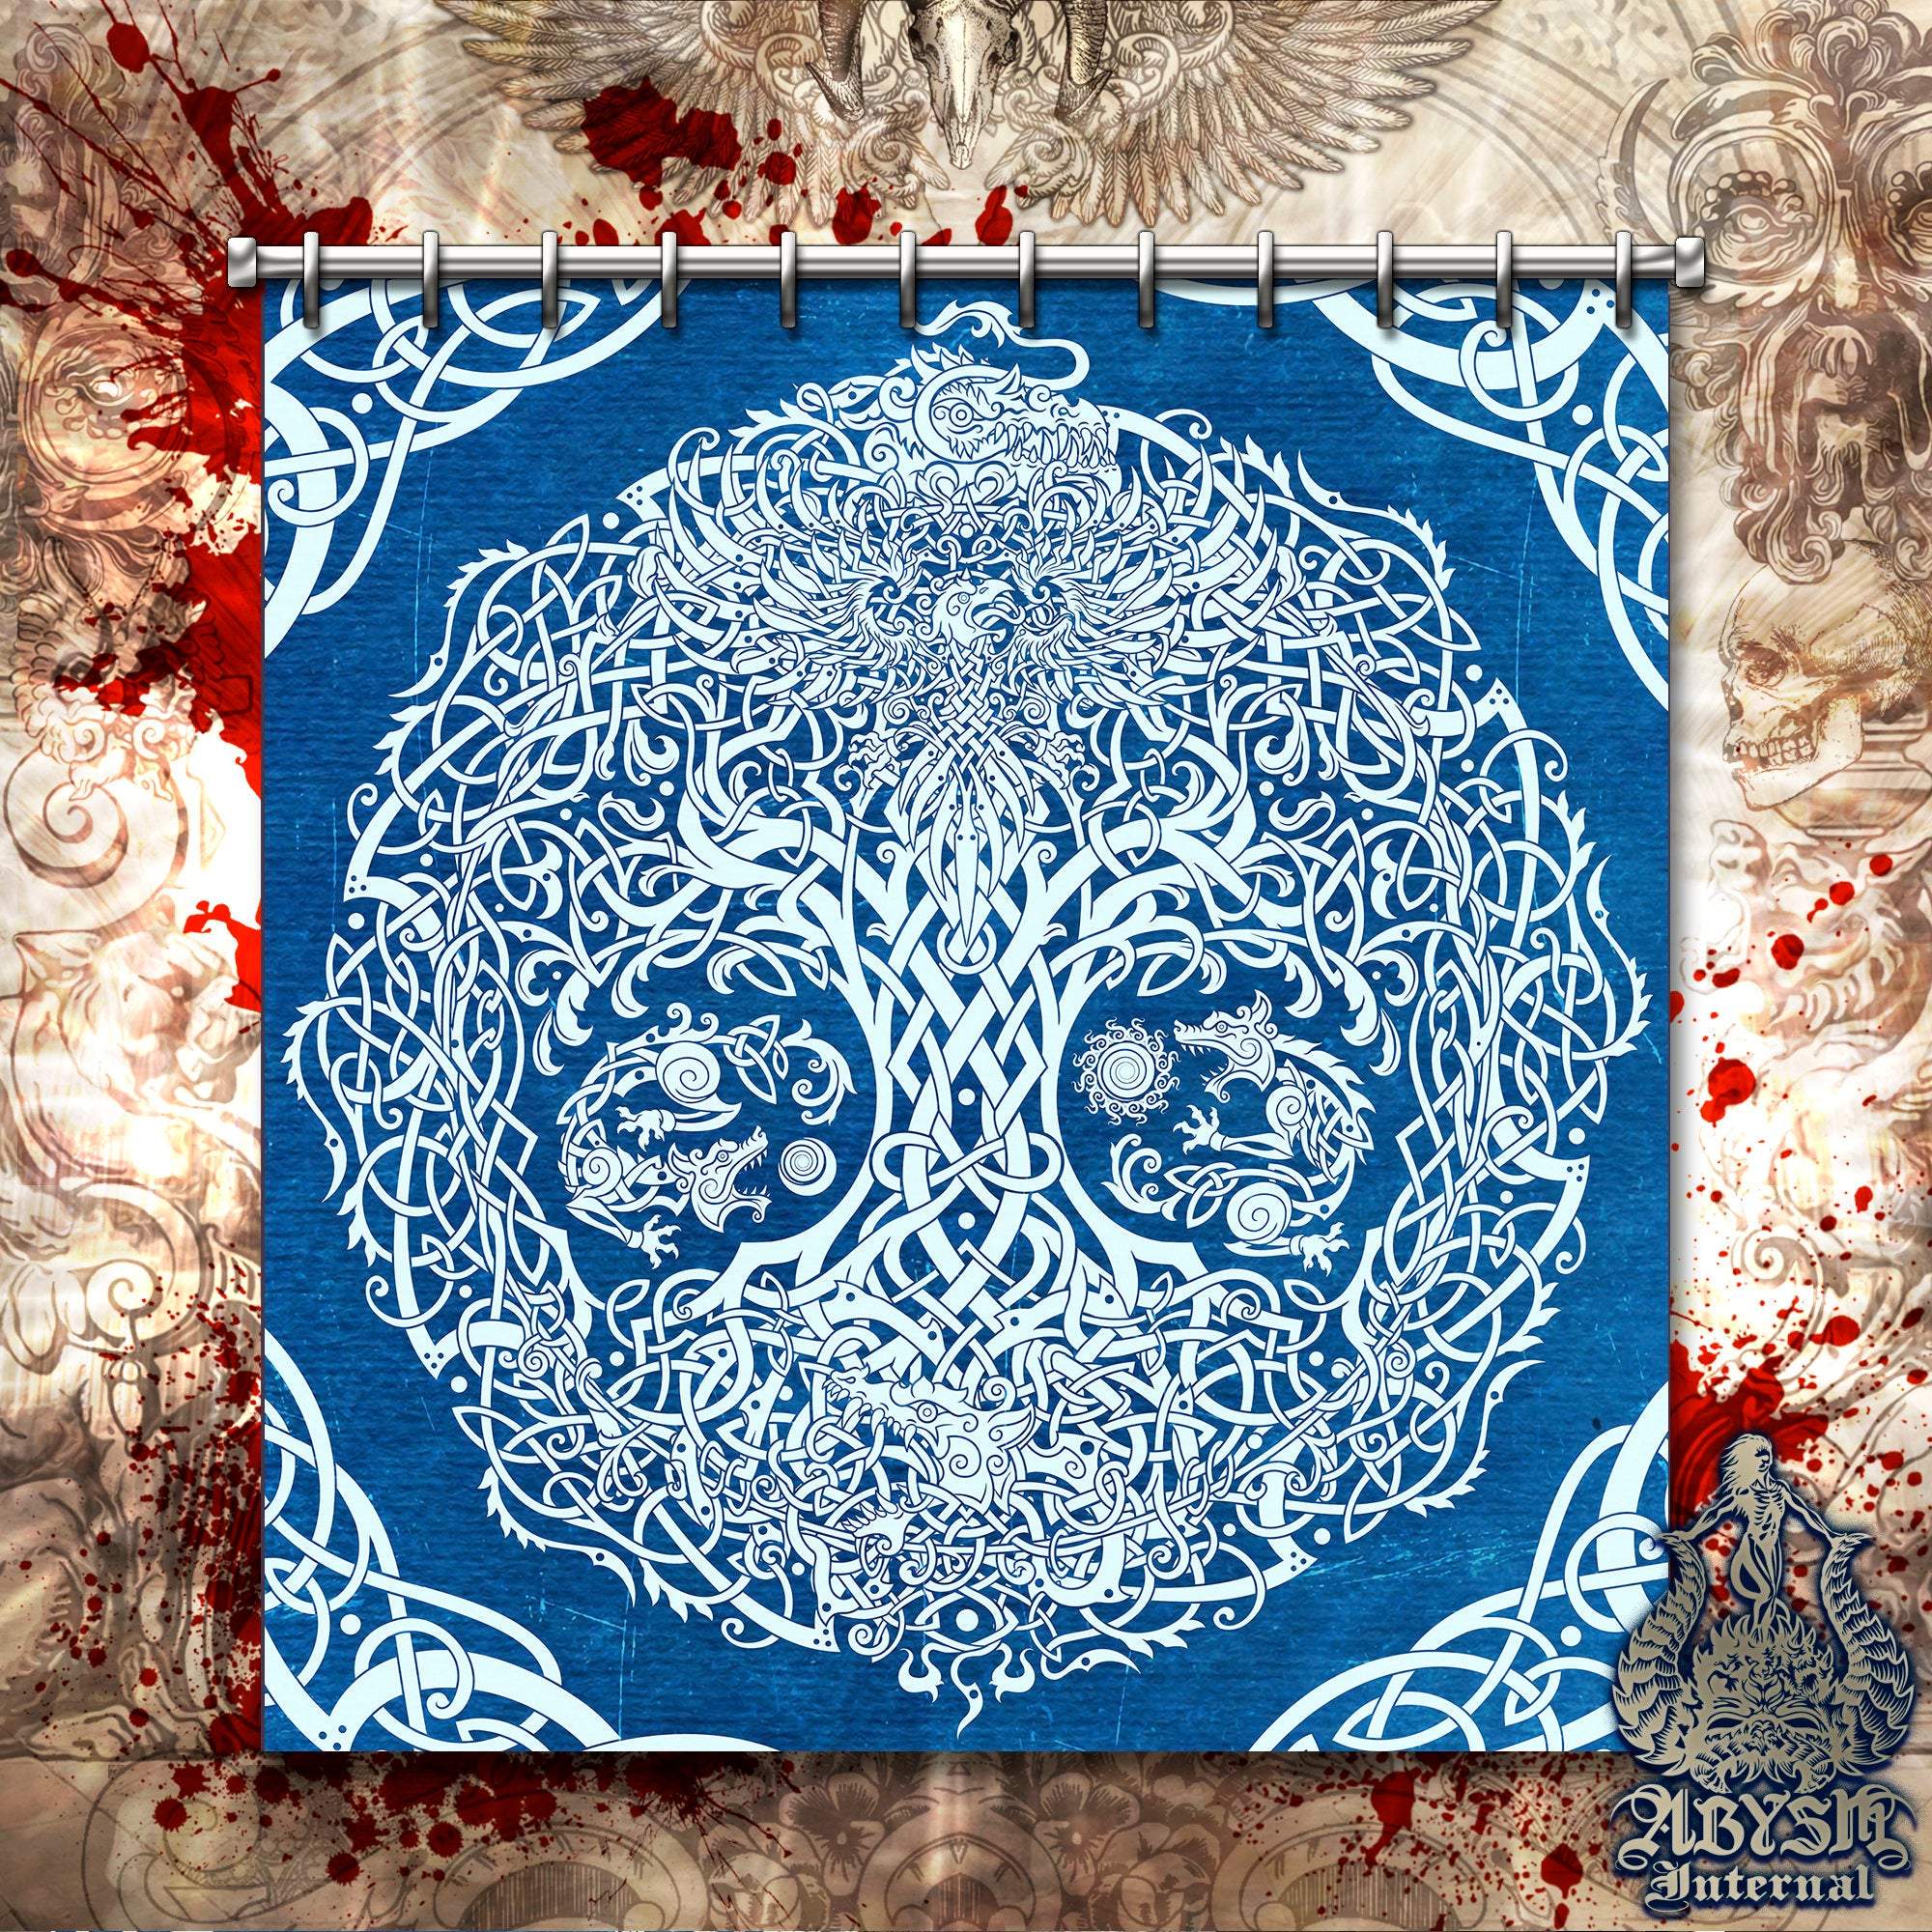 Viking Shower Curtain, Yggdrasil, Norse Bathroom Decor, Pagan, Tree of Life - Blue - Abysm Internal